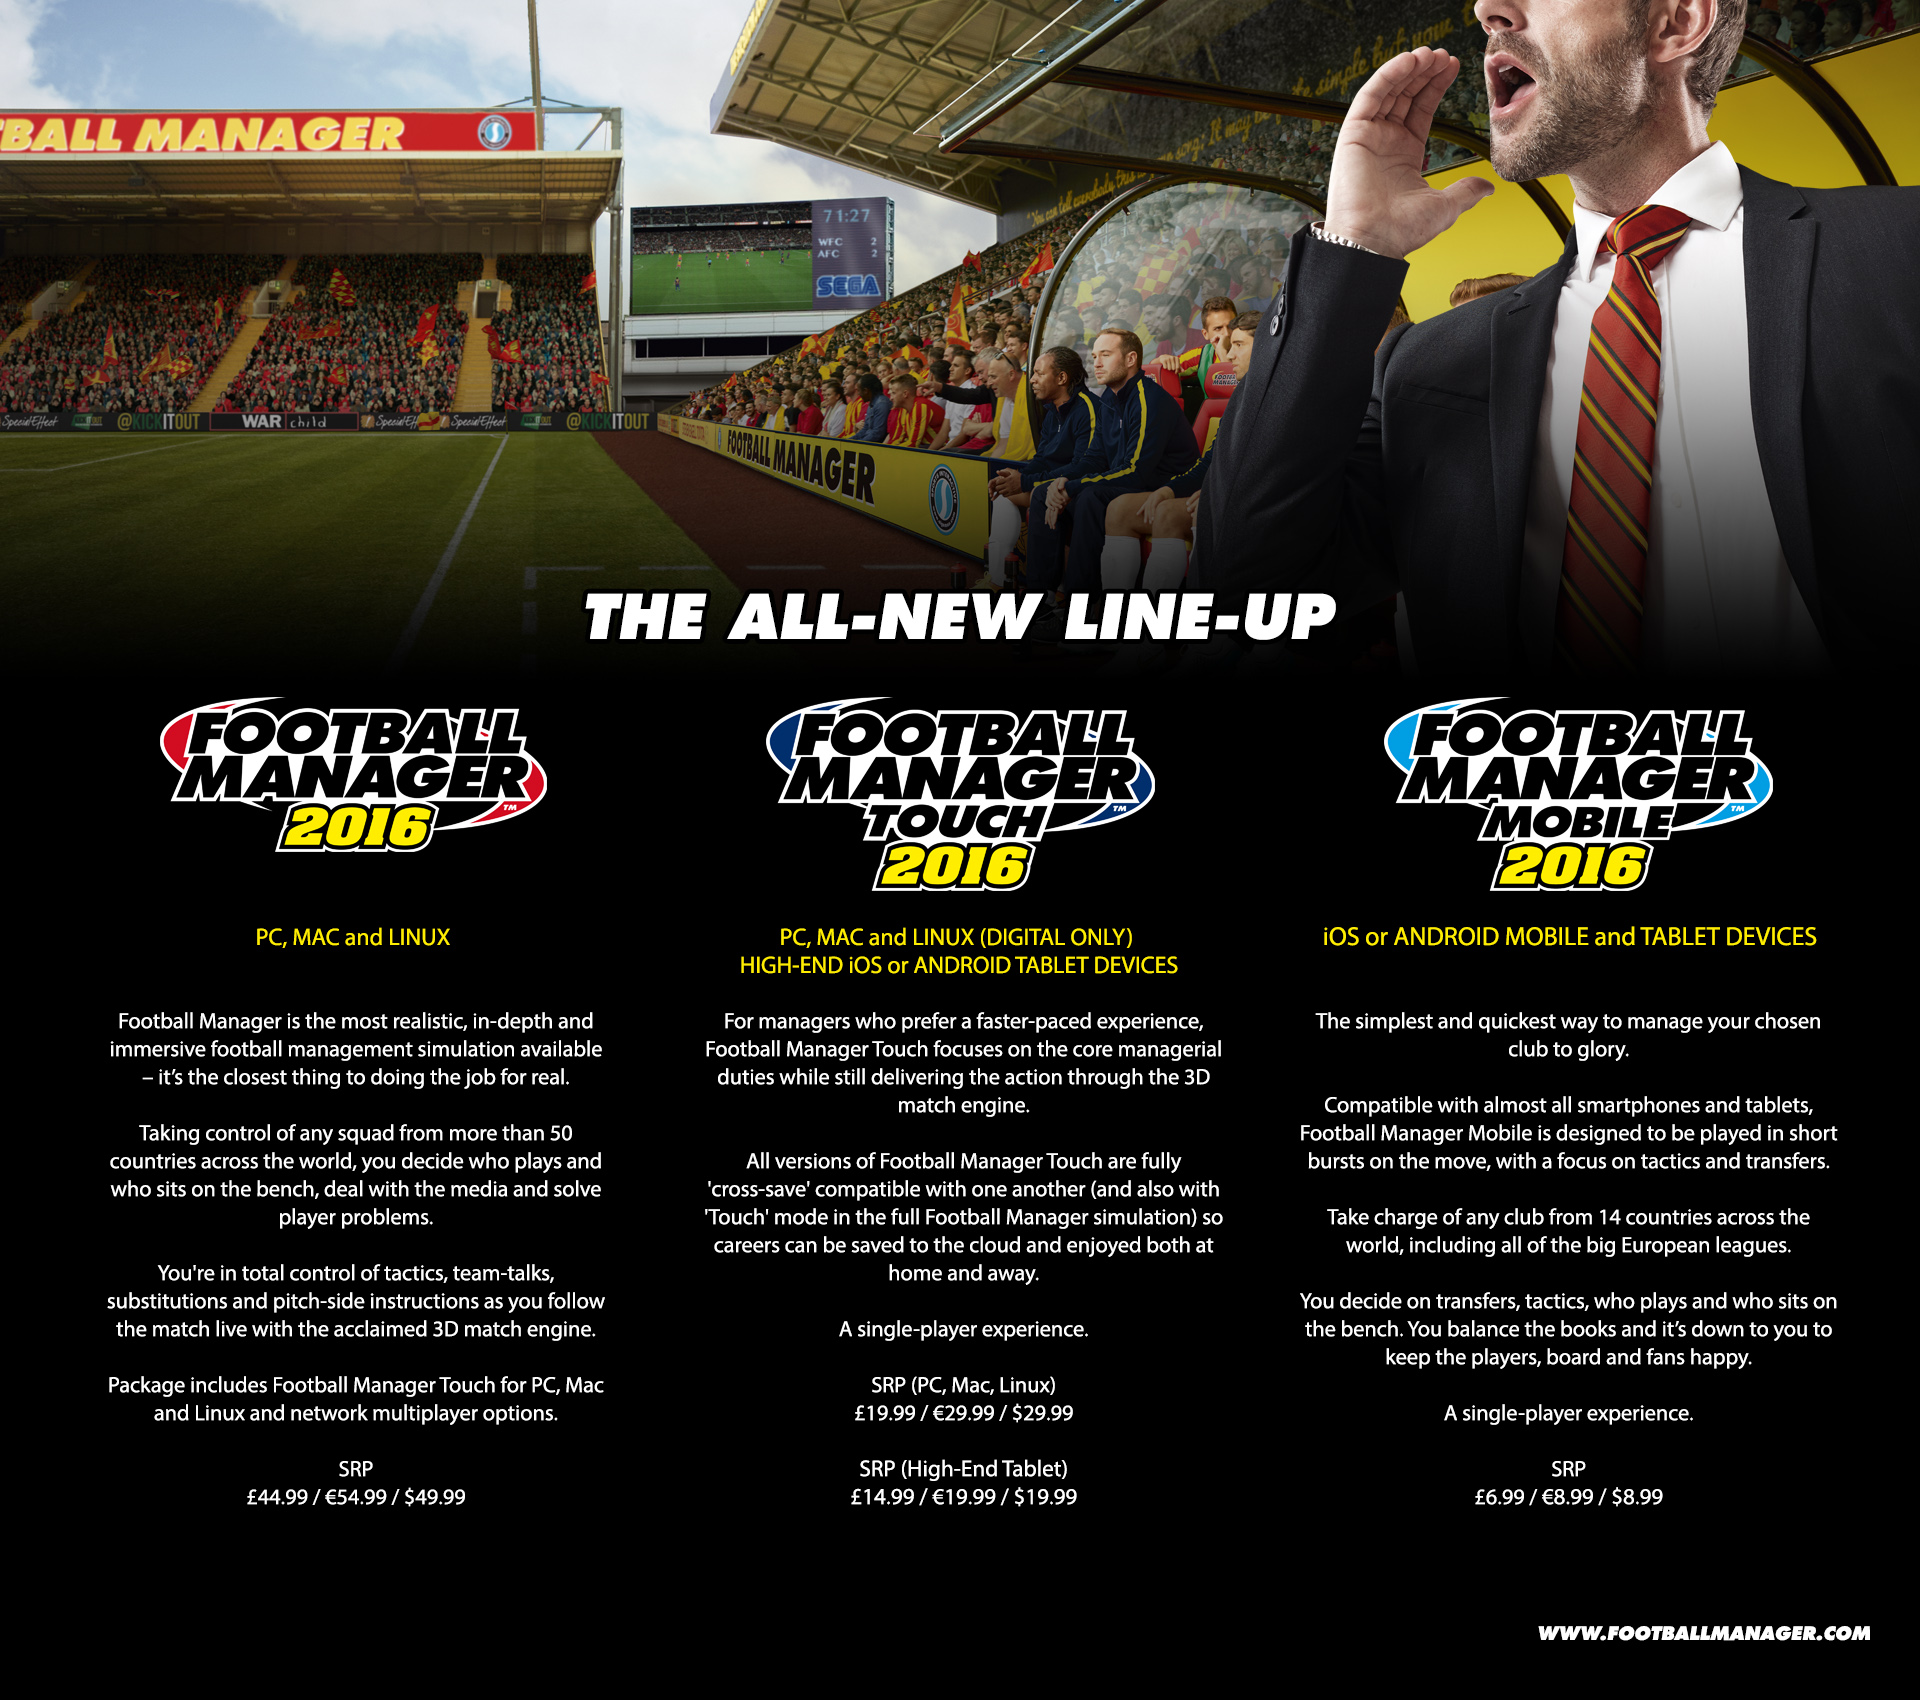 New Lineup Of Football Manager 16 Games Announced Godisageek Com